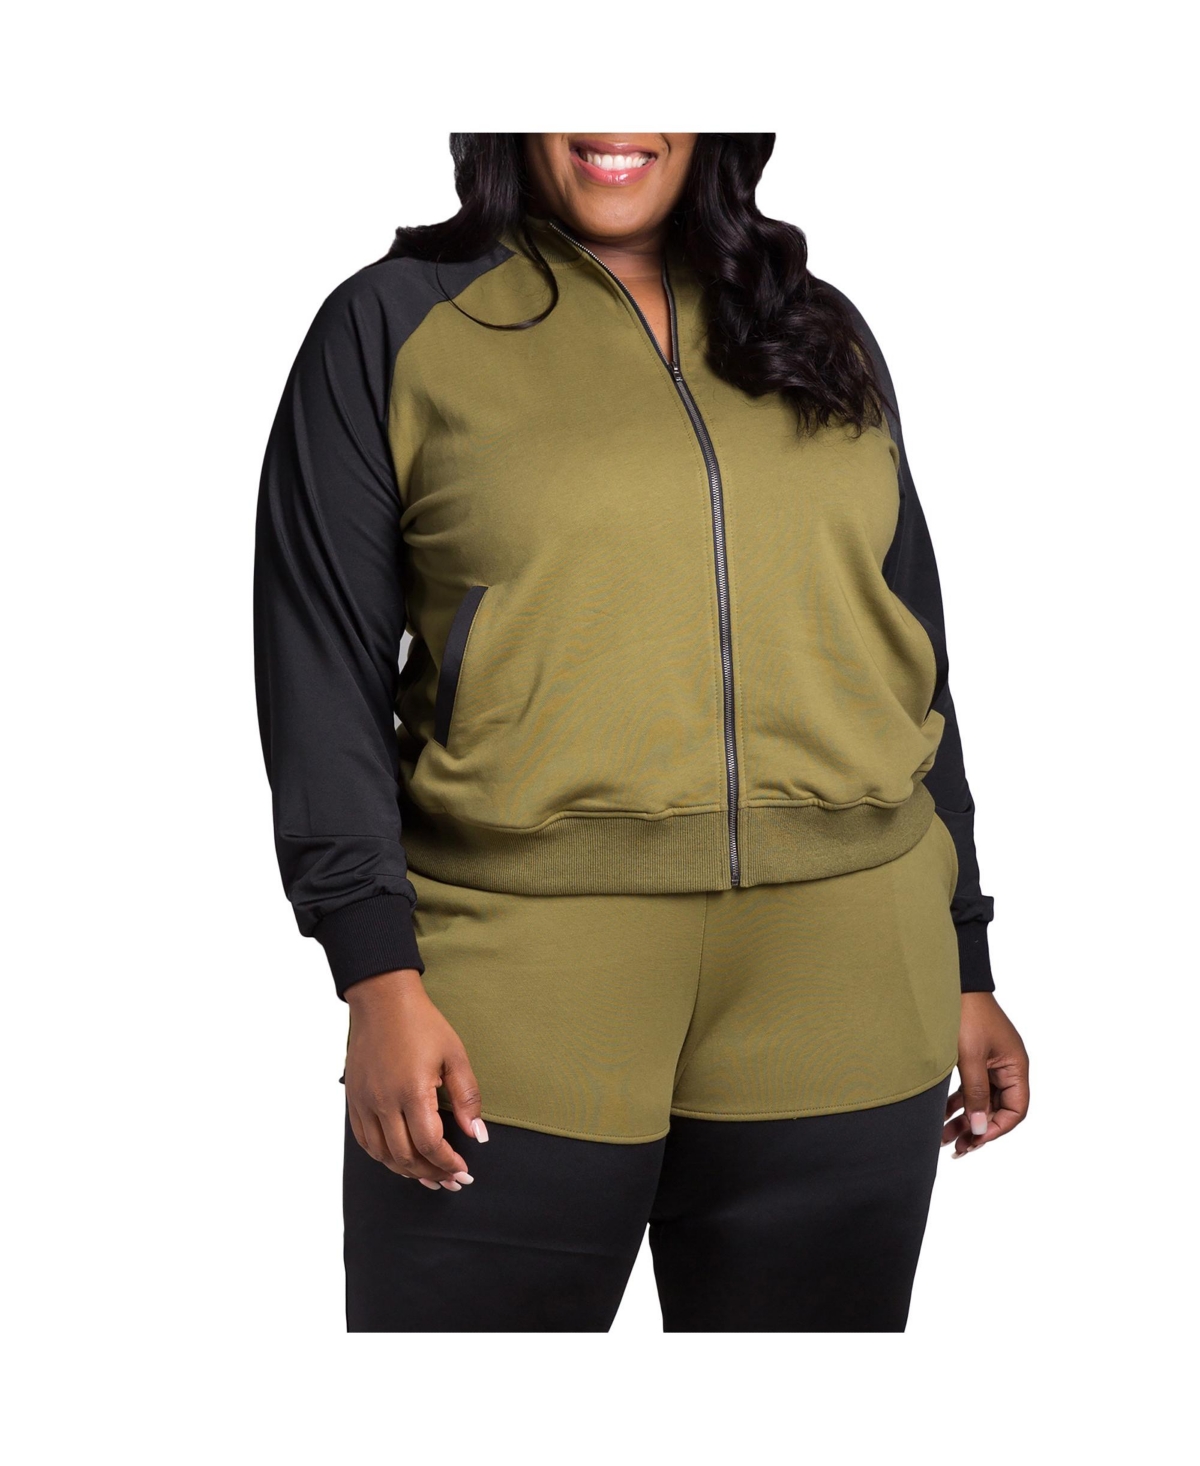 Women's Plus Size Curvy Fit Zip Up Contrast Blocked Sweatshirt Jacket - Light olive